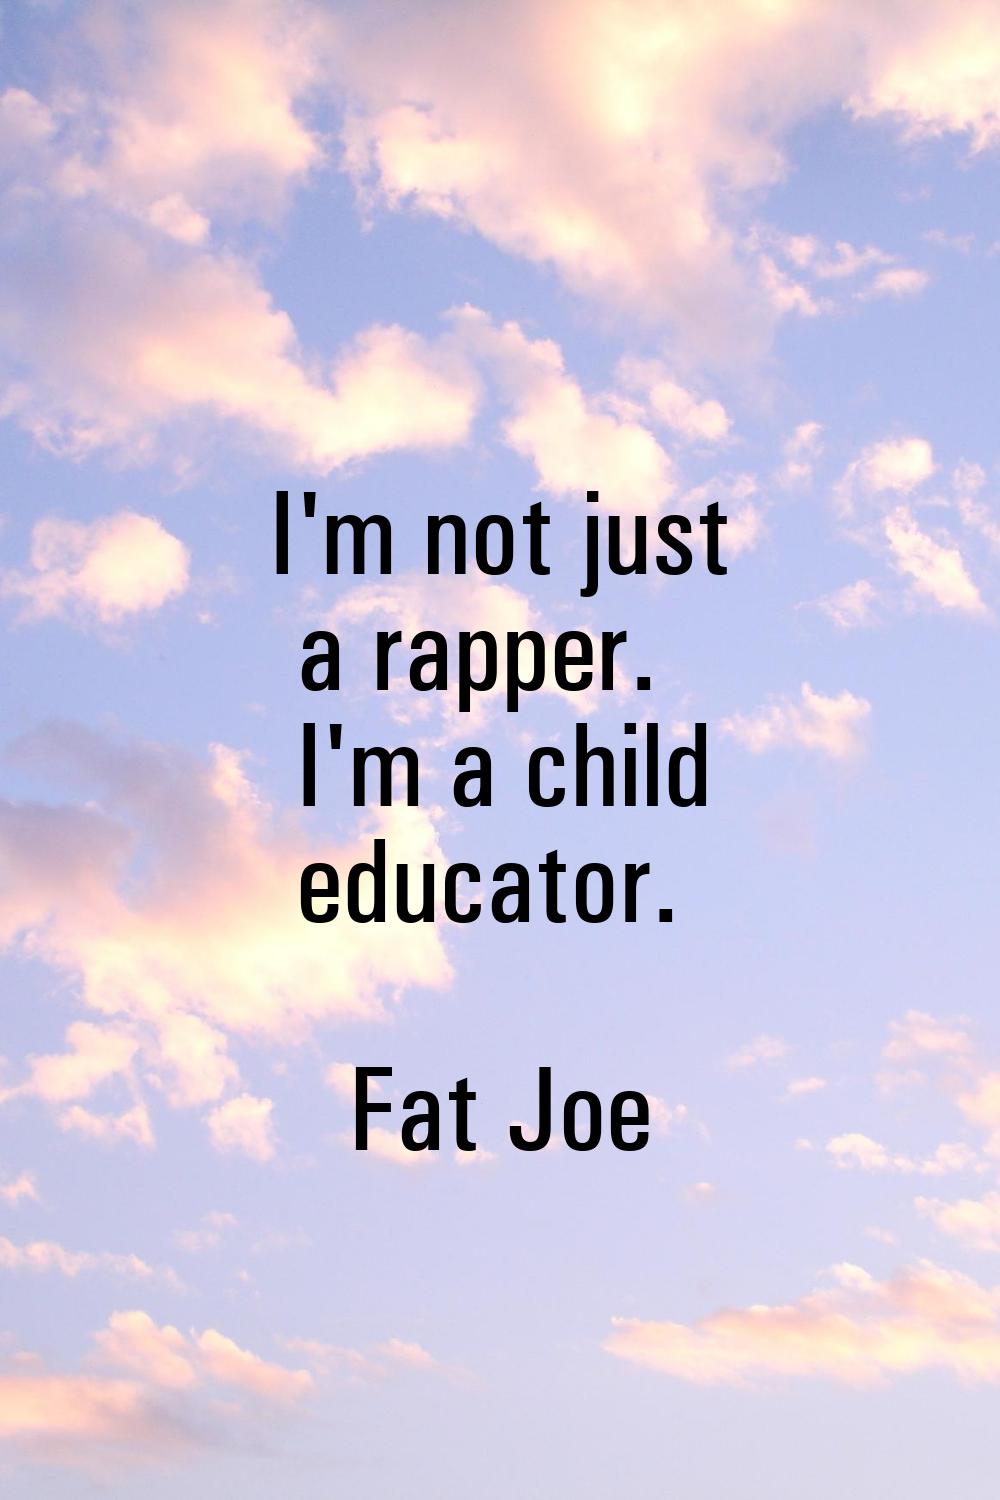 I'm not just a rapper. I'm a child educator.